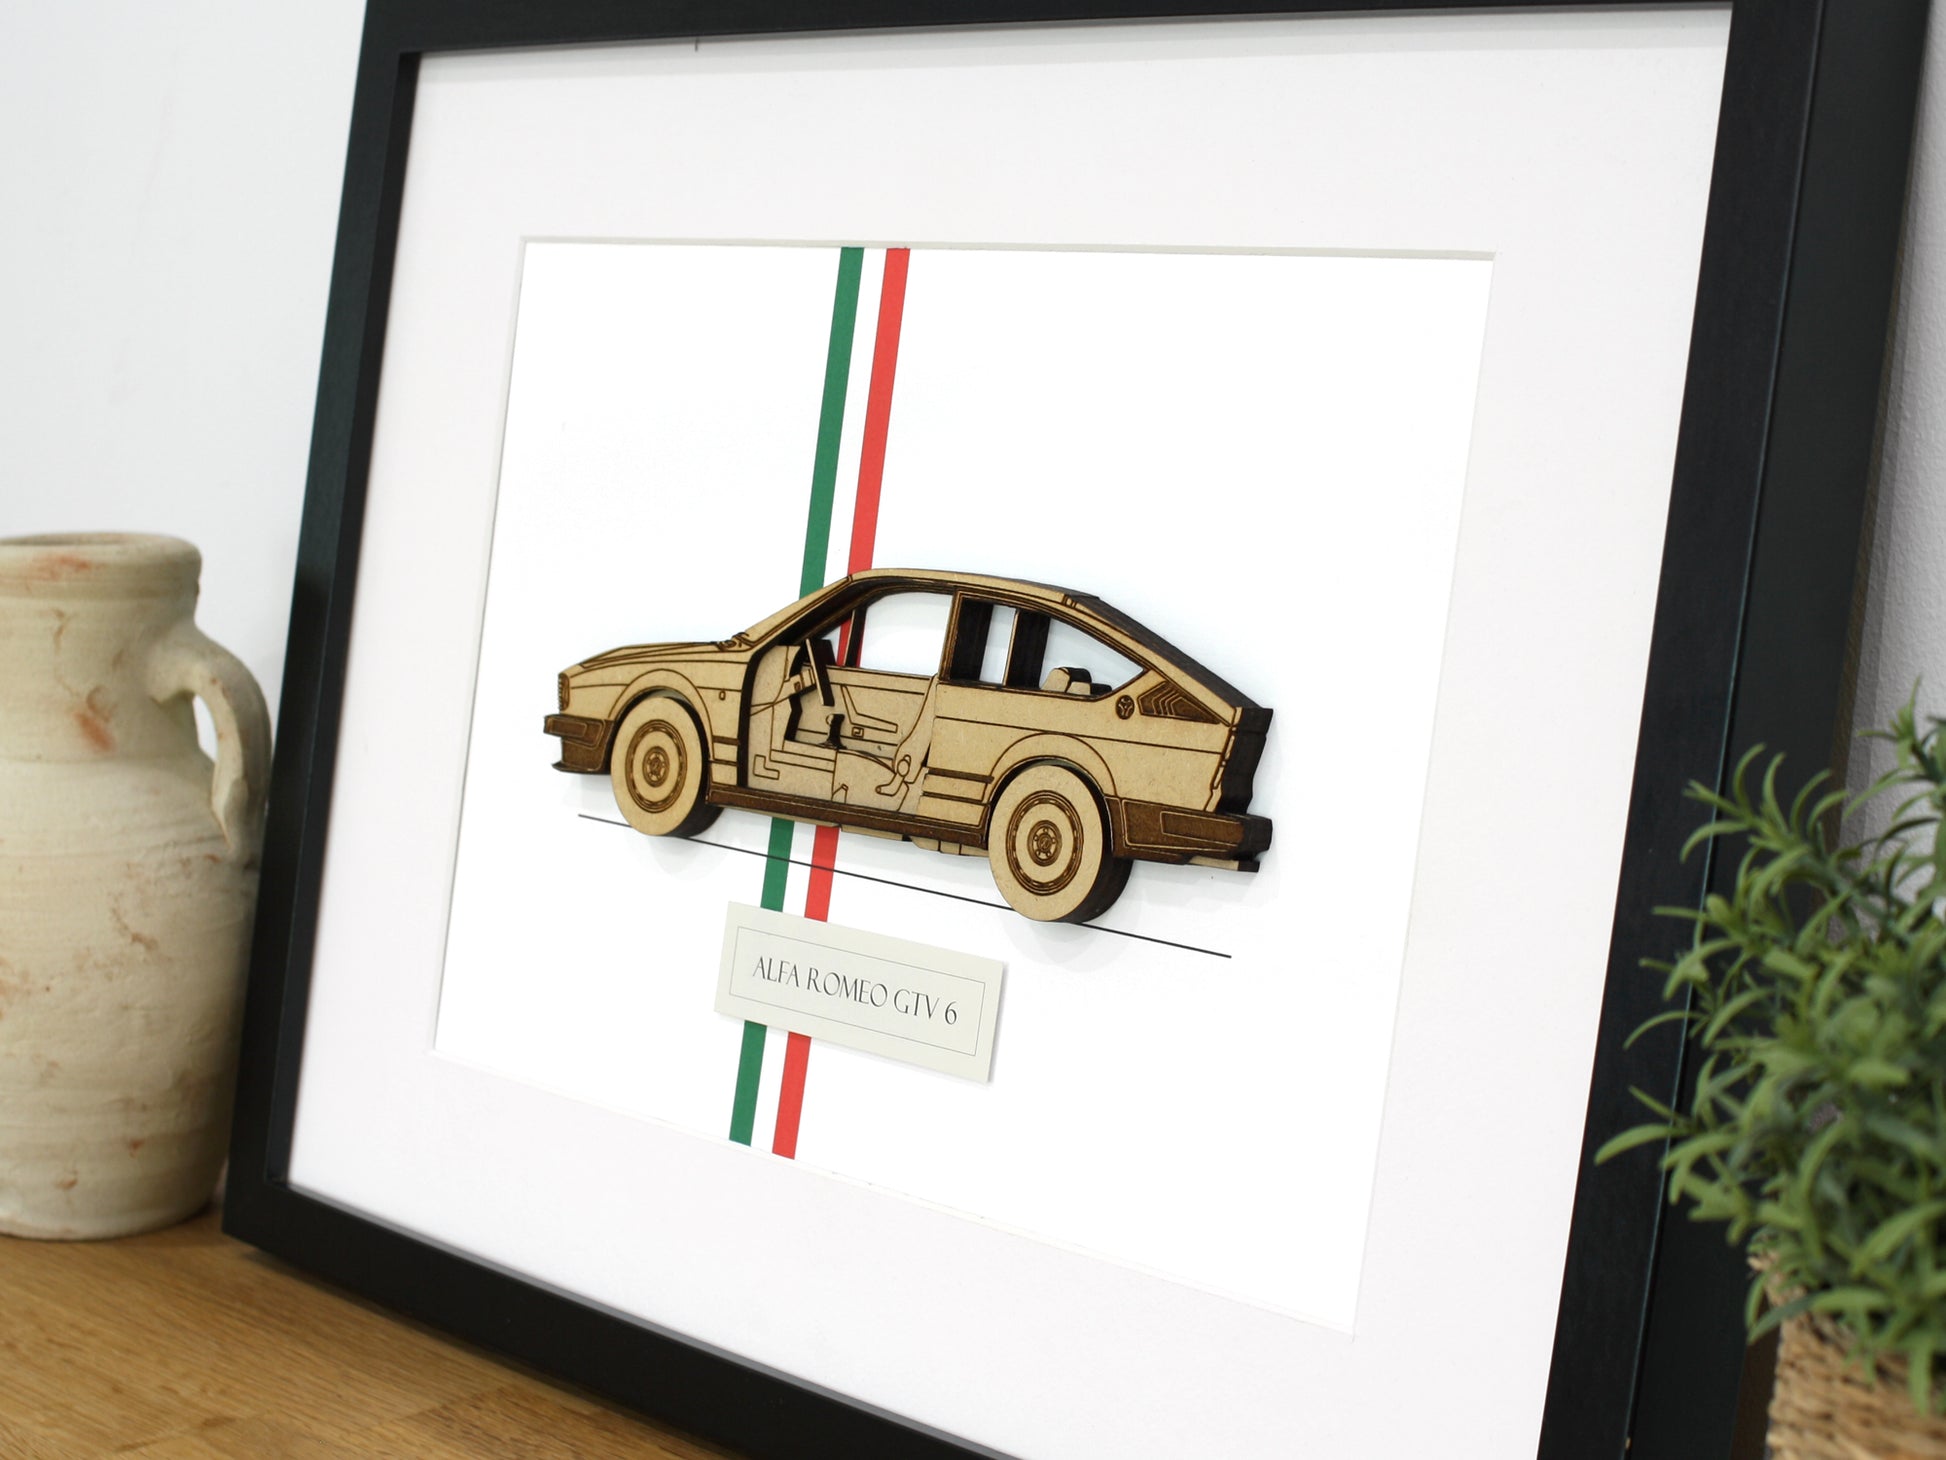 Alfa Romeo GTV 6 art